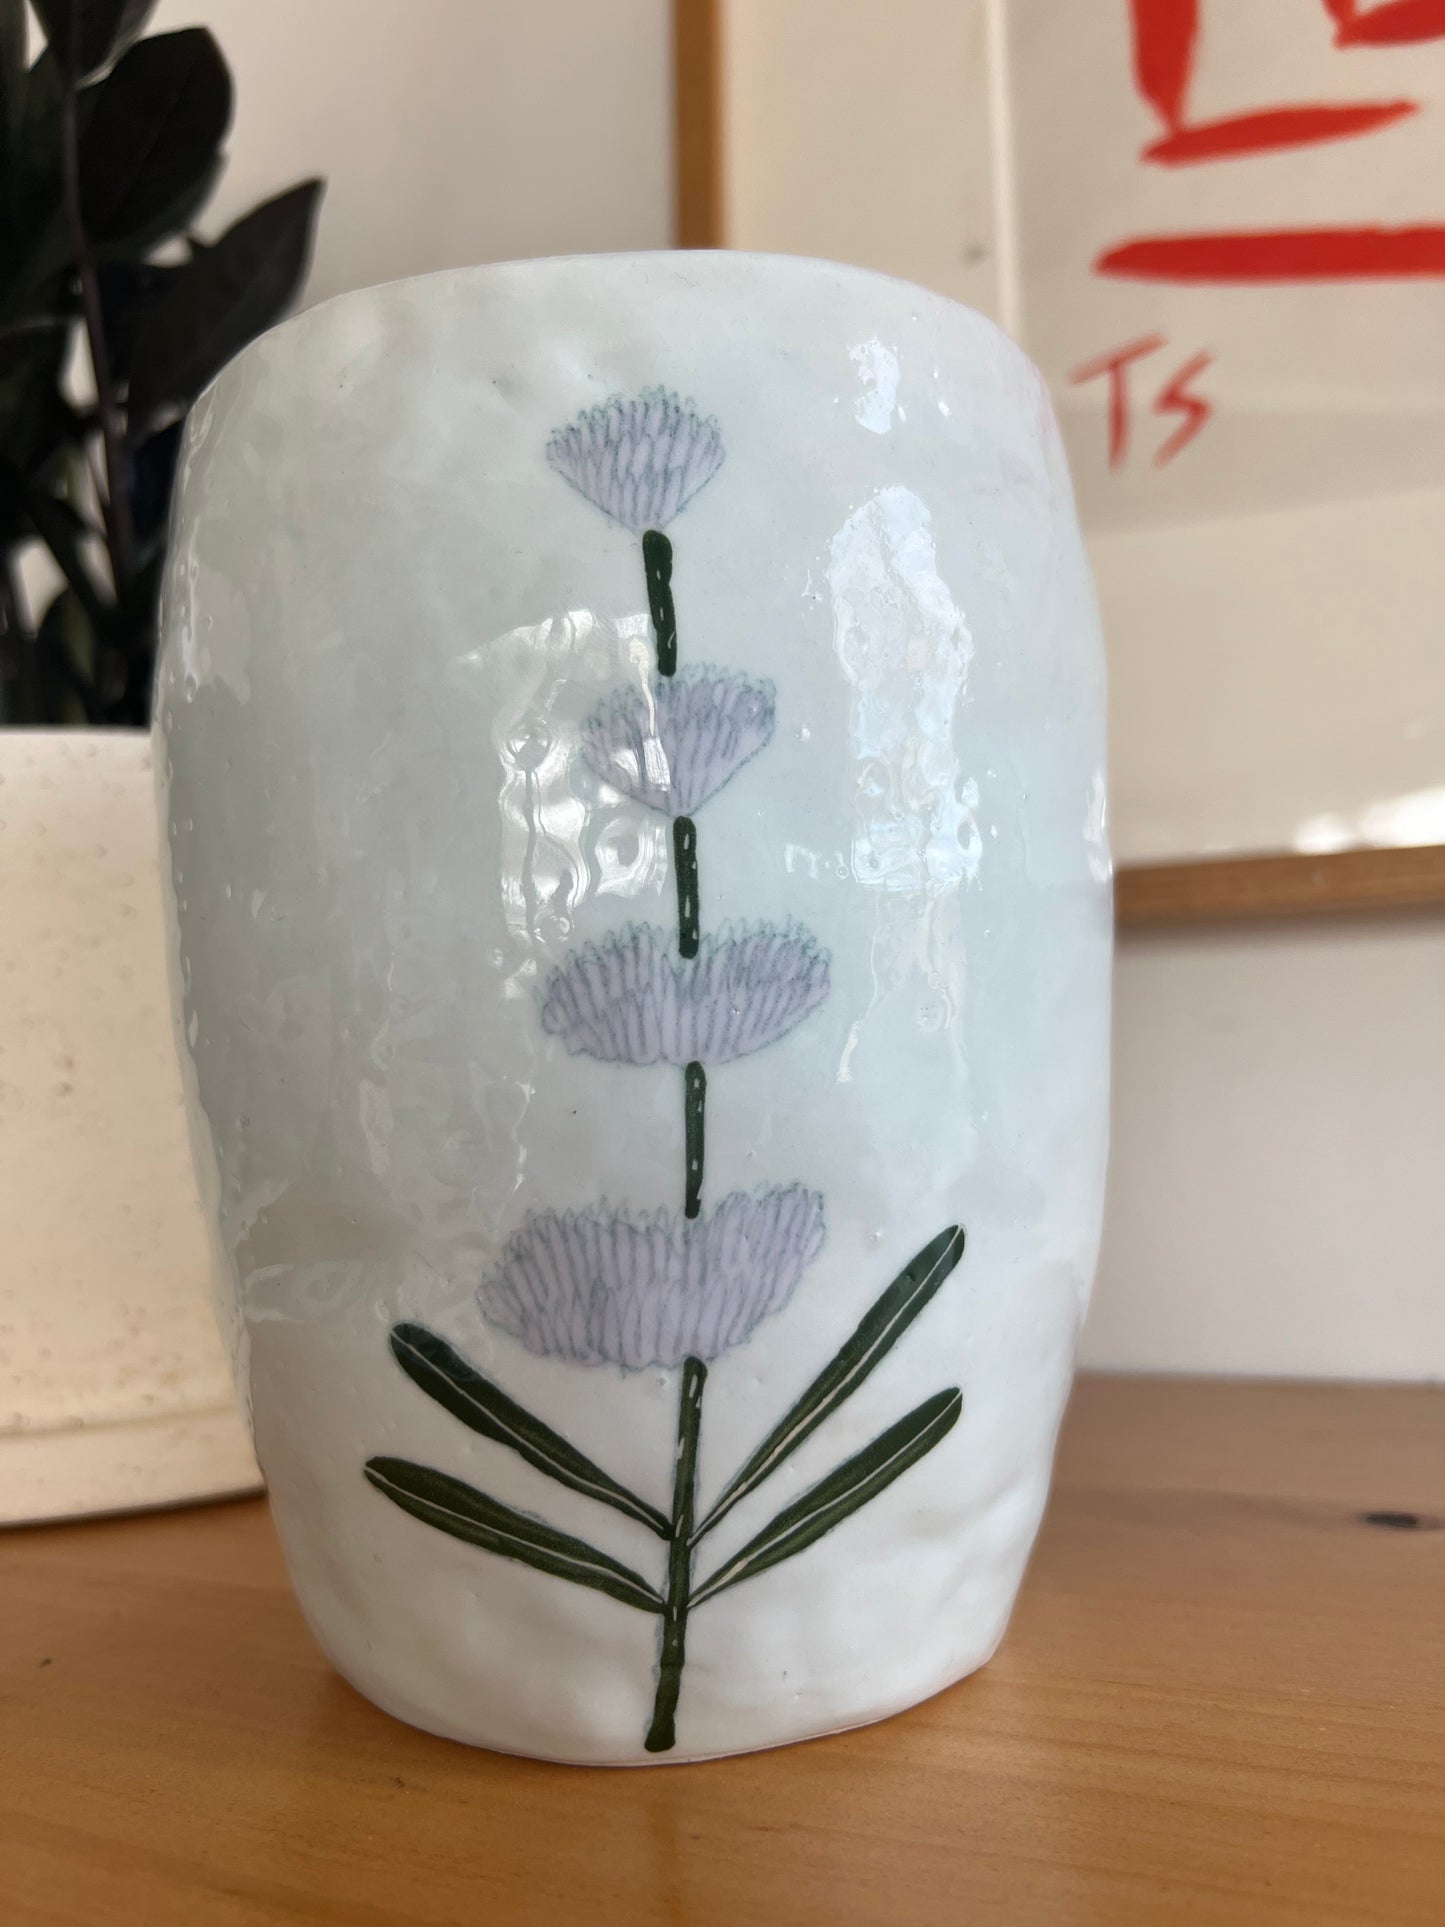 An Organic Handmade Vase